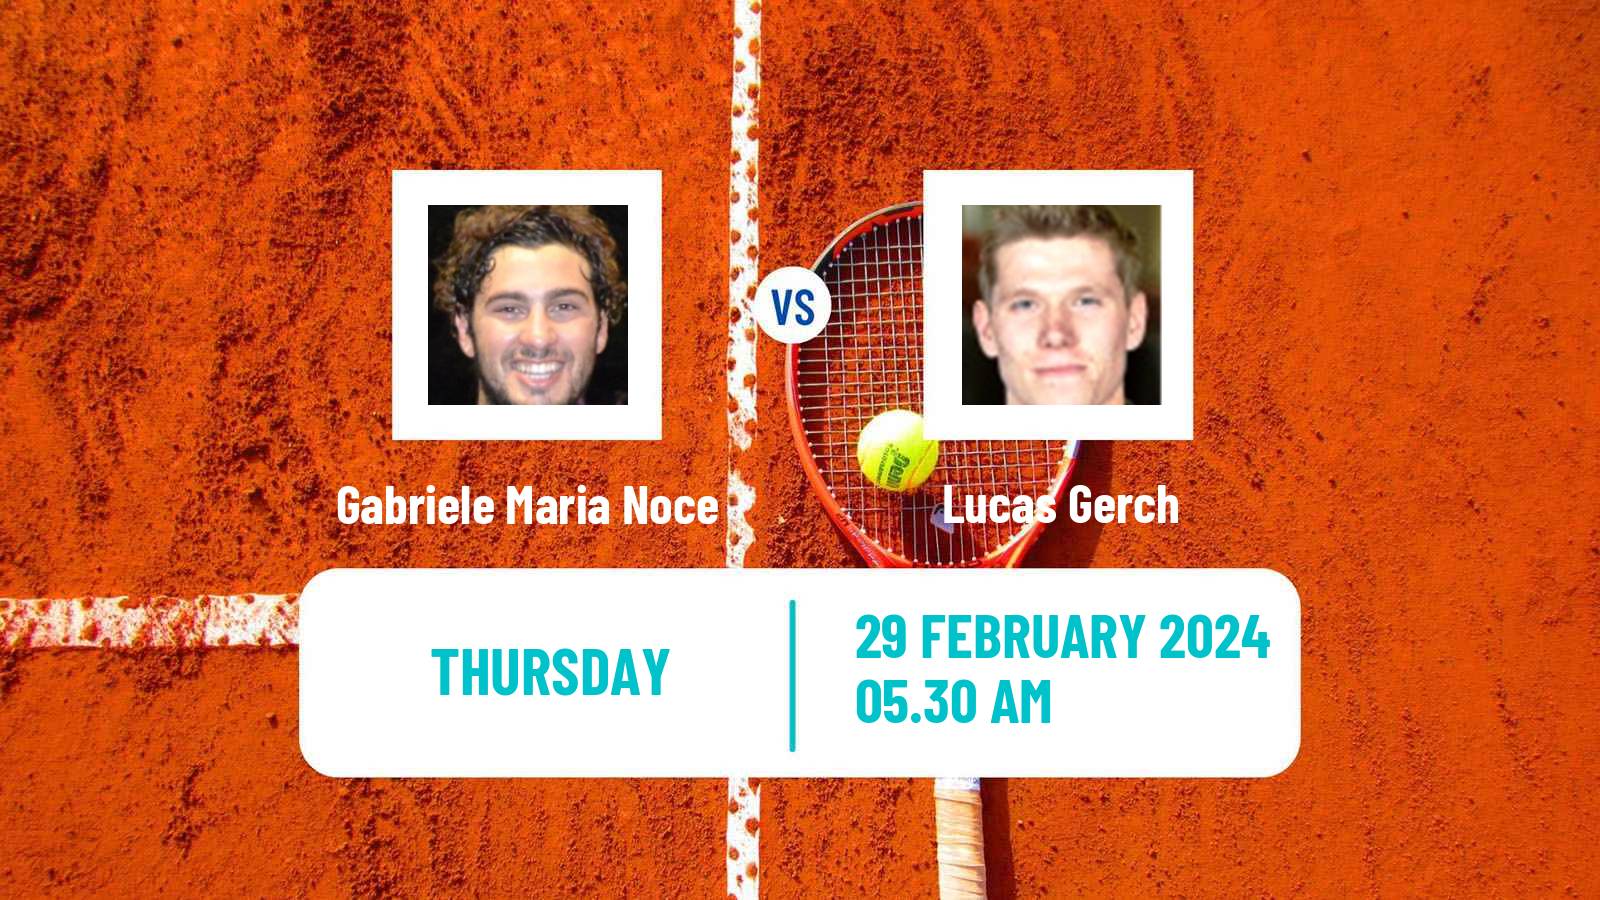 Tennis ITF M15 Antalya 4 Men Gabriele Maria Noce - Lucas Gerch